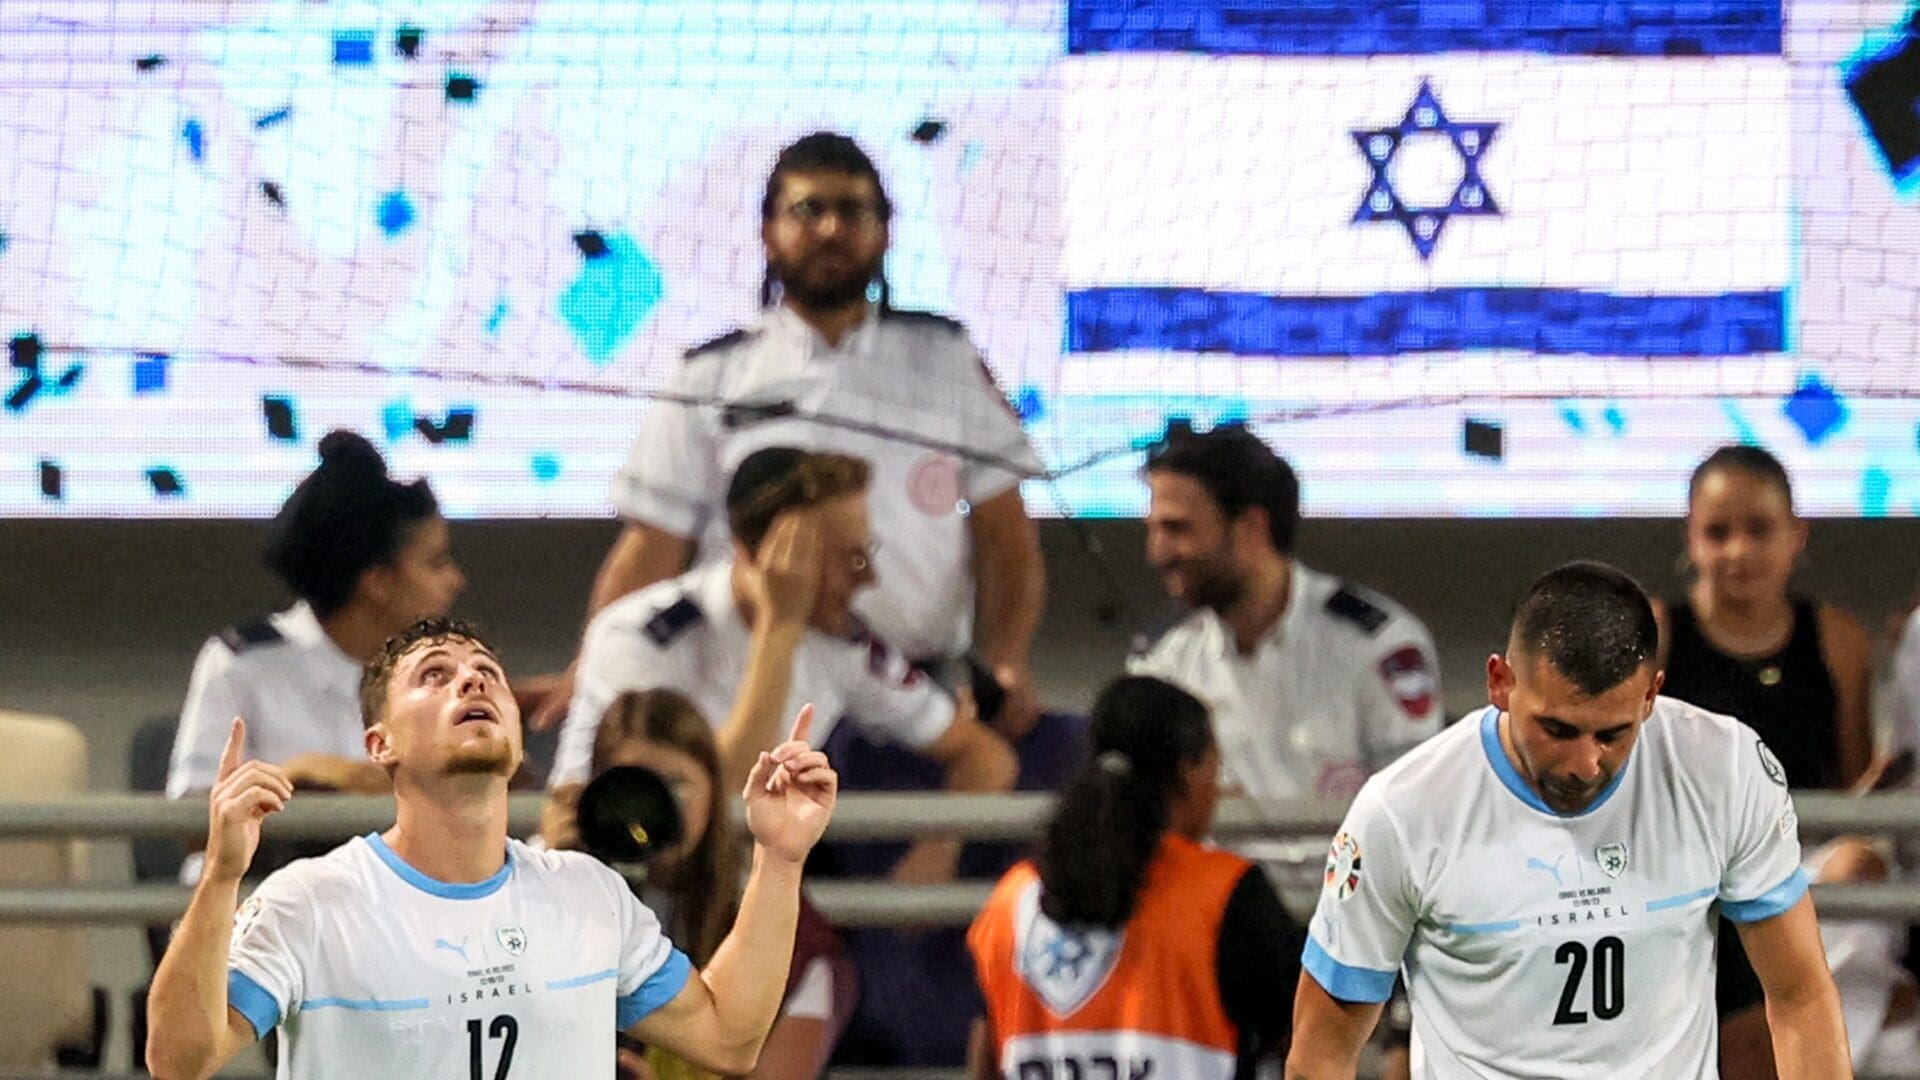 Europei, Israele giocherà la partita 'in casa' dei playoff in Ungheria